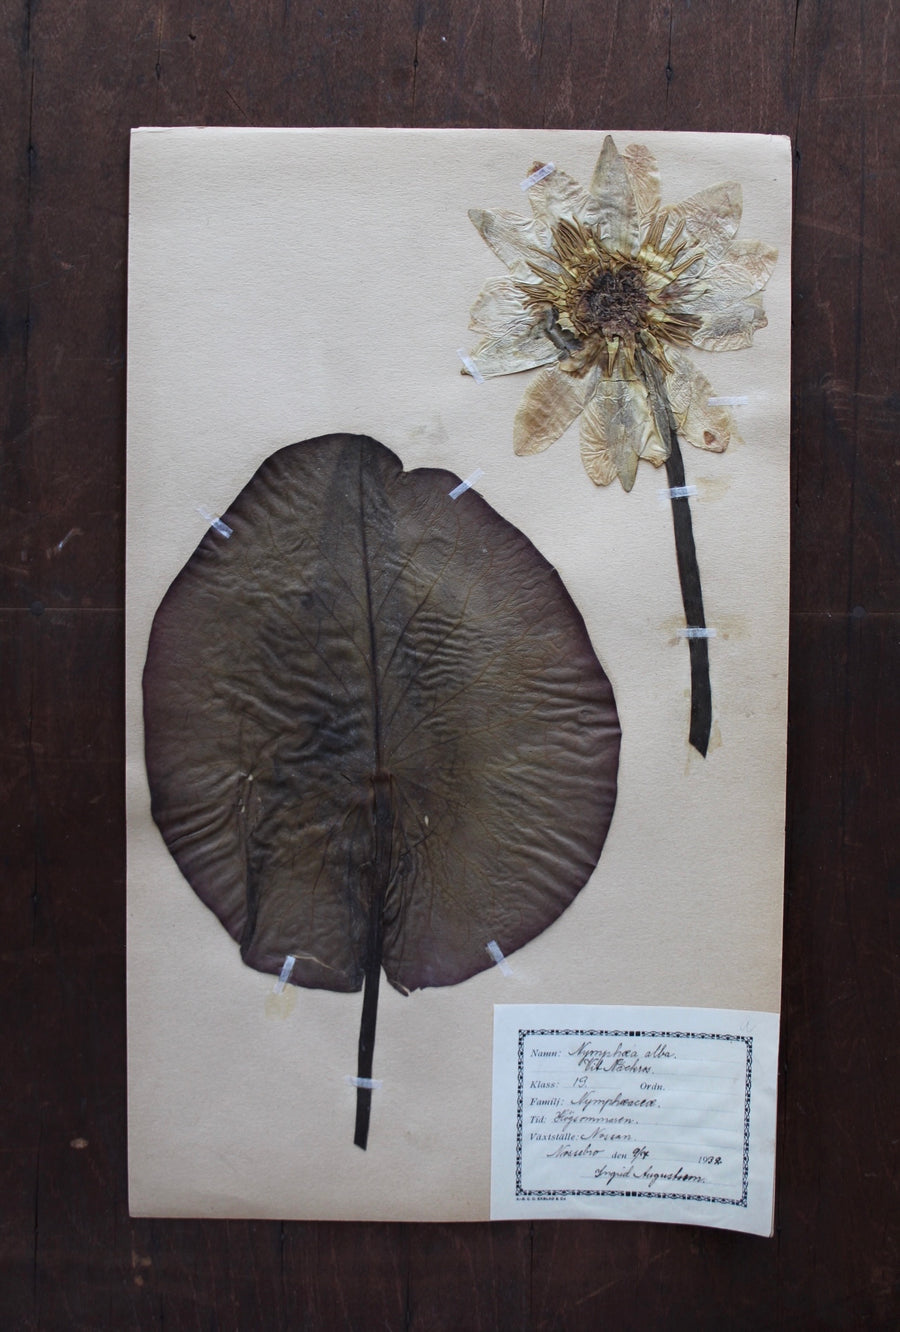 1930s Swedish Herbarium Specimen - White Water-Lily